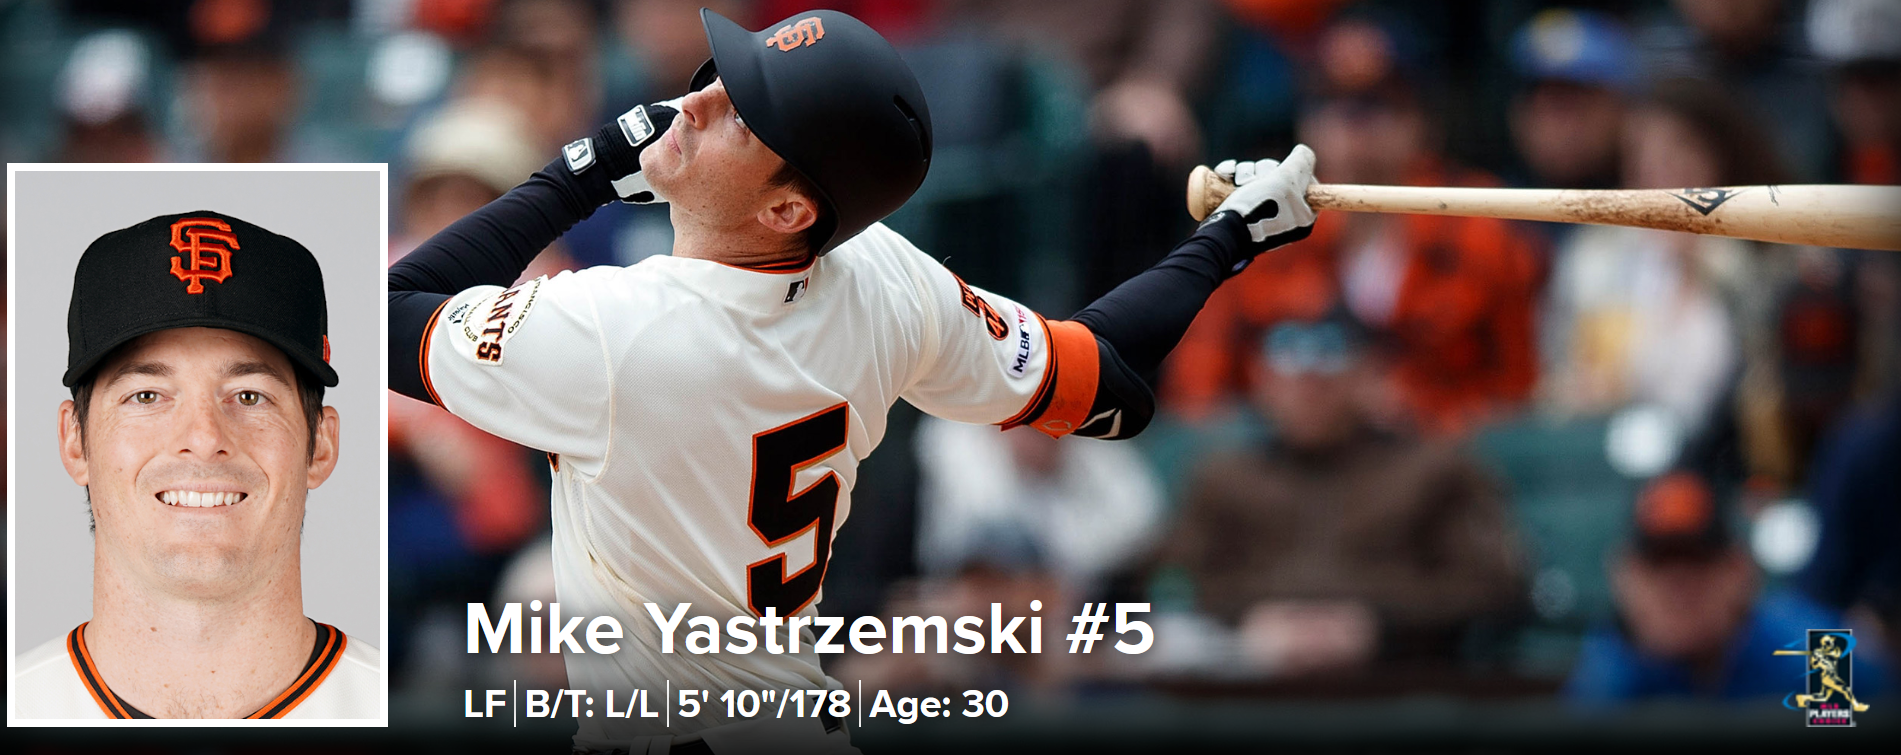 Mike Yastrzemski, Baseball Wiki